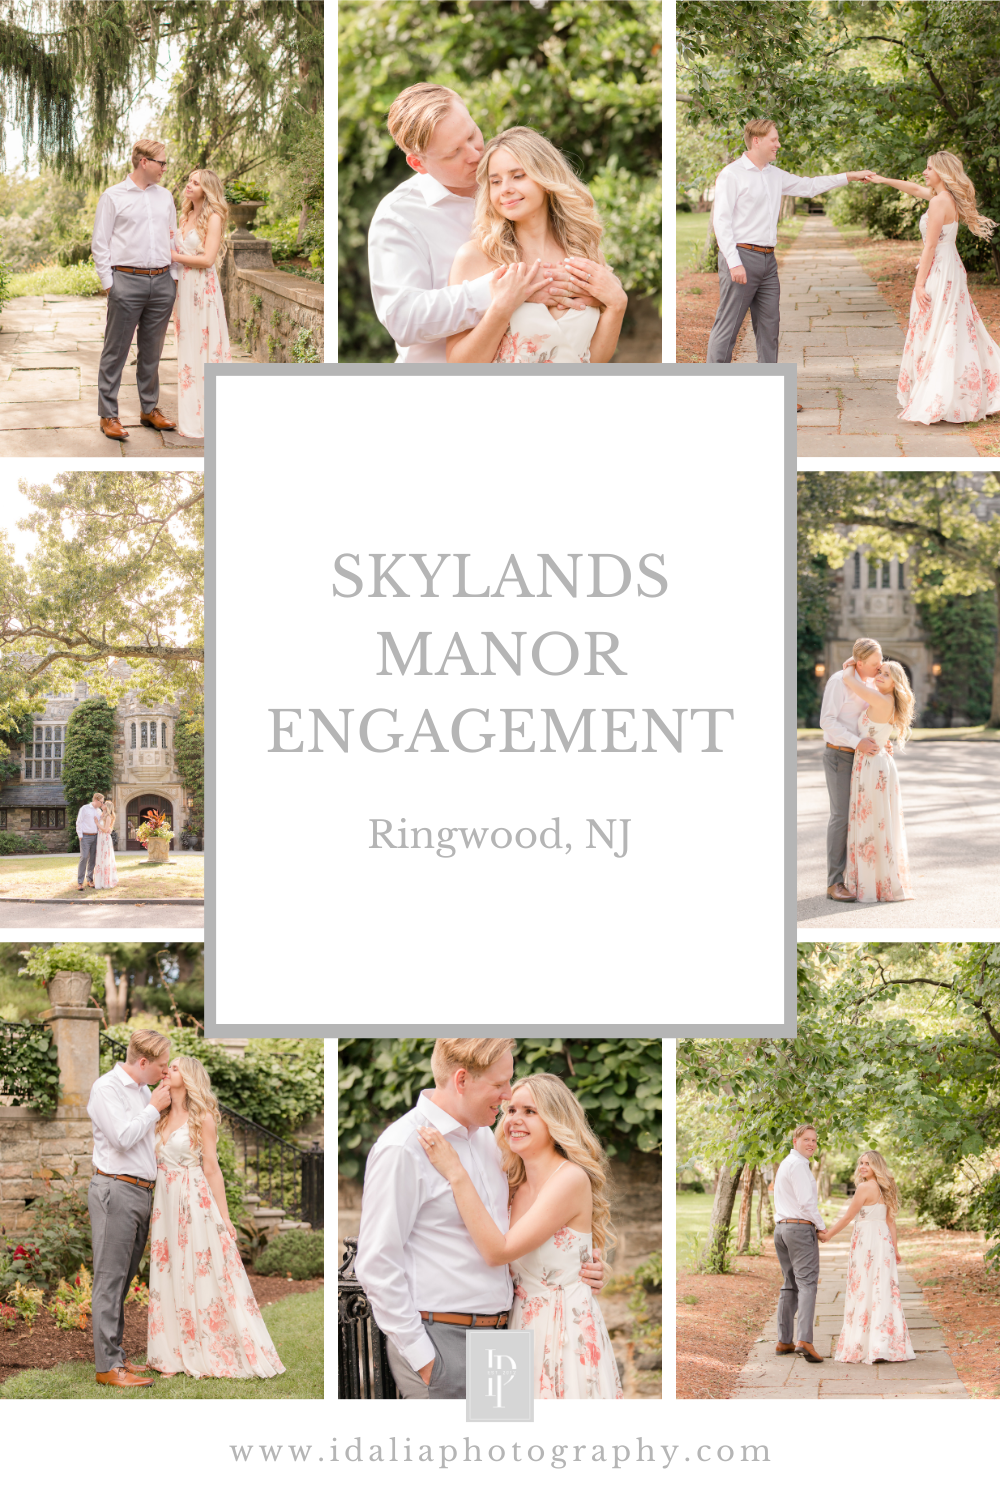 Skylands Manor engagement session with Idalia Photography